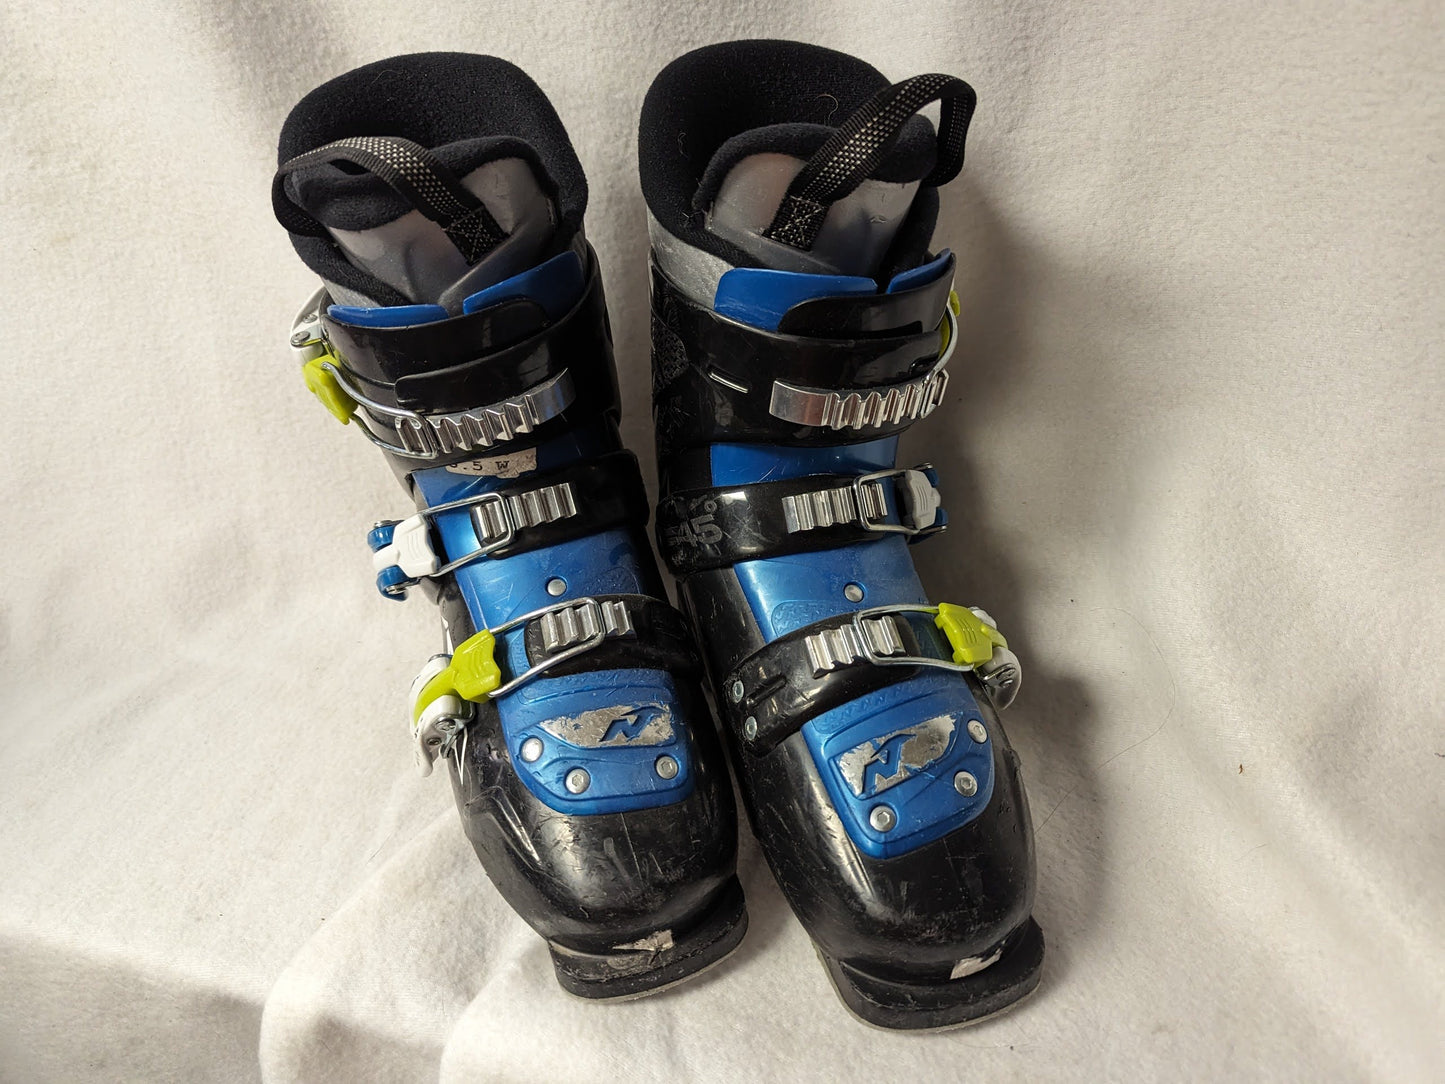 Nordica Firearrow Team 3 Ski Boots Size 23.5 Color Black Condition Used